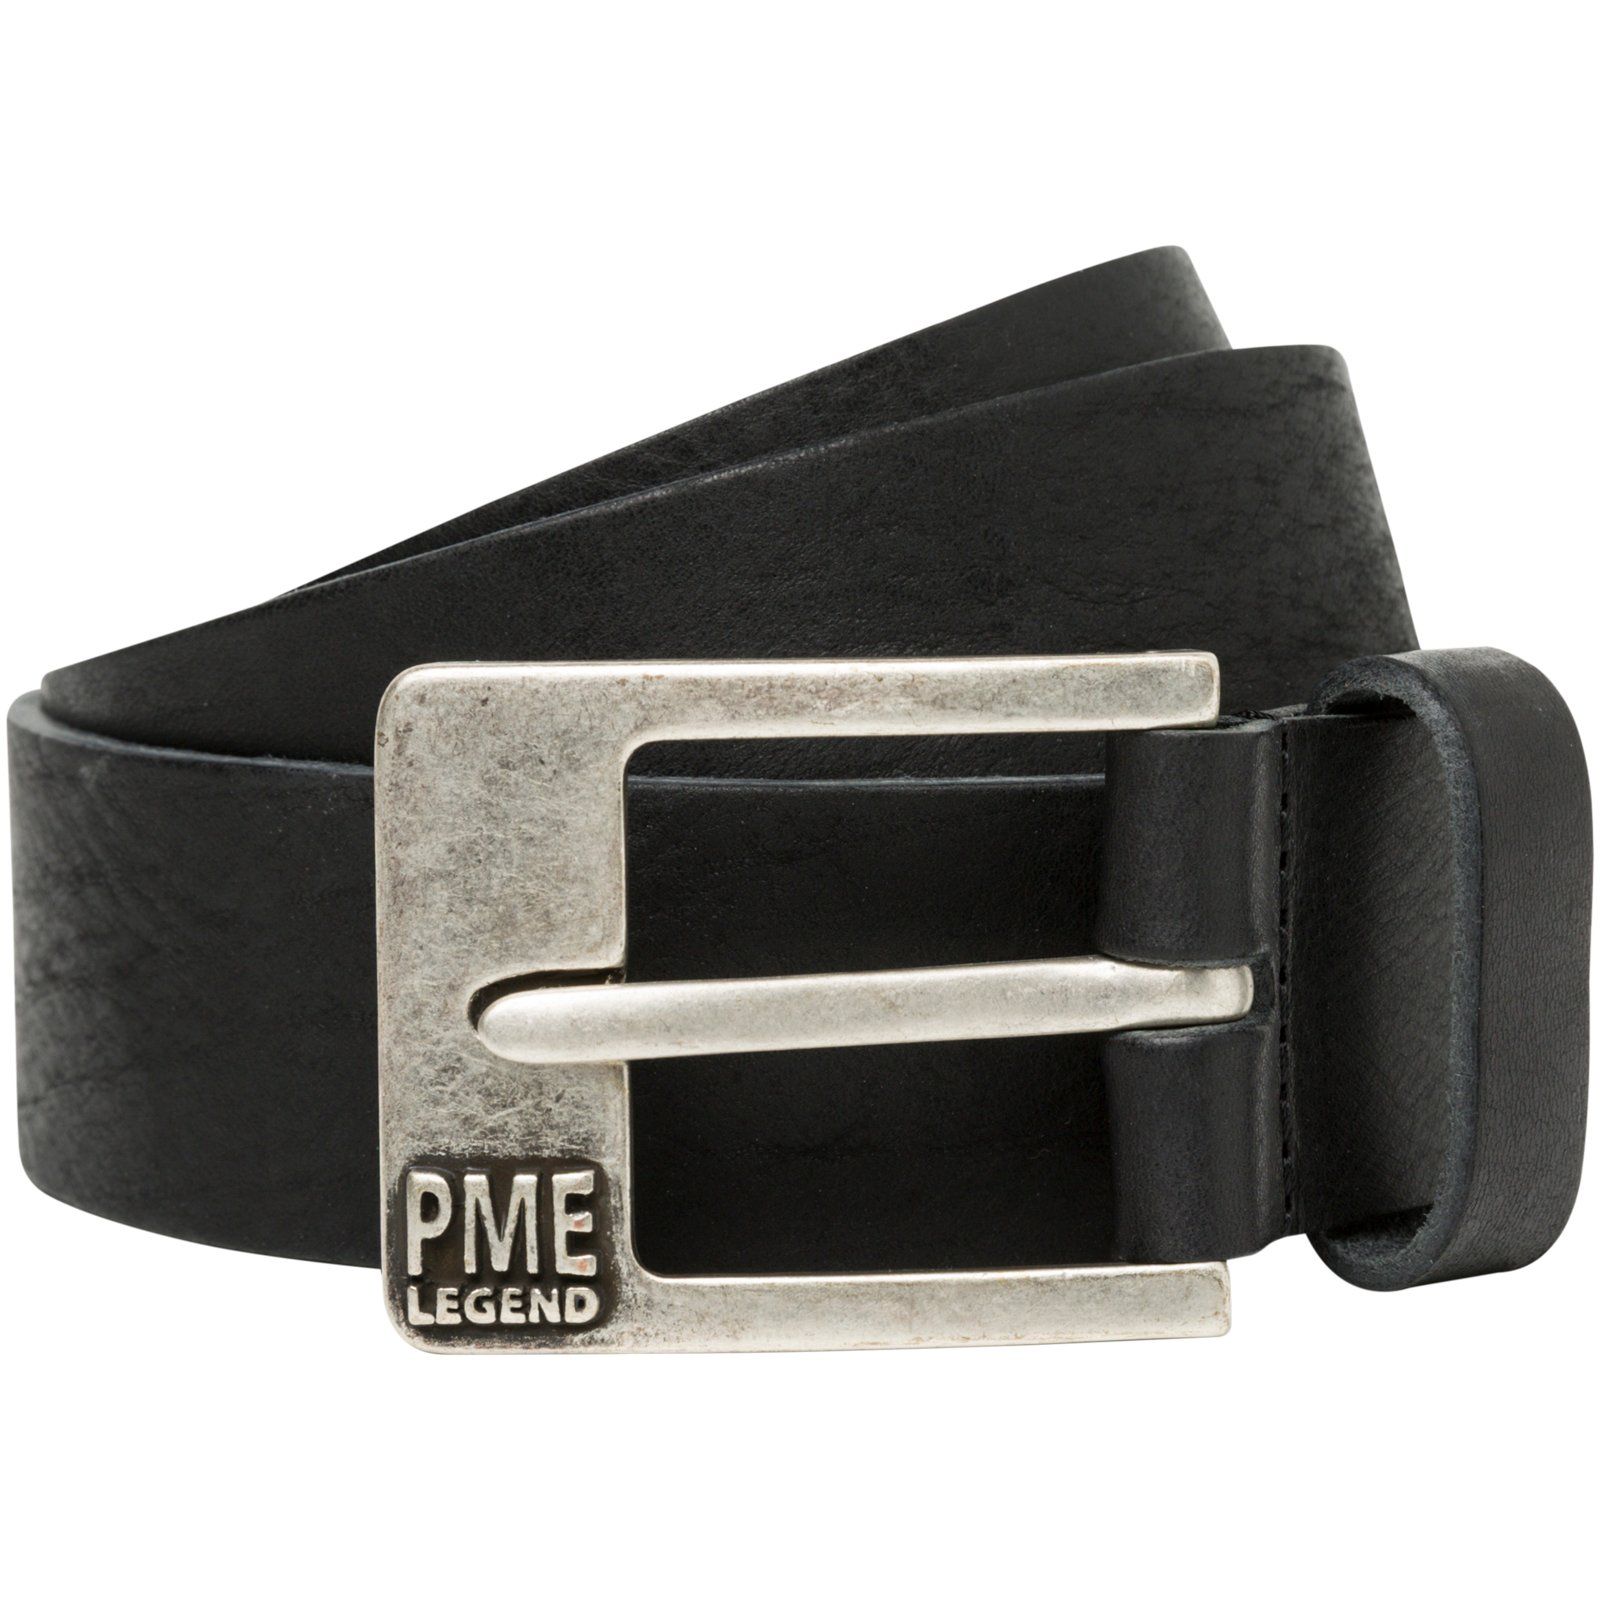 PME Legend Belt Black size 37.4